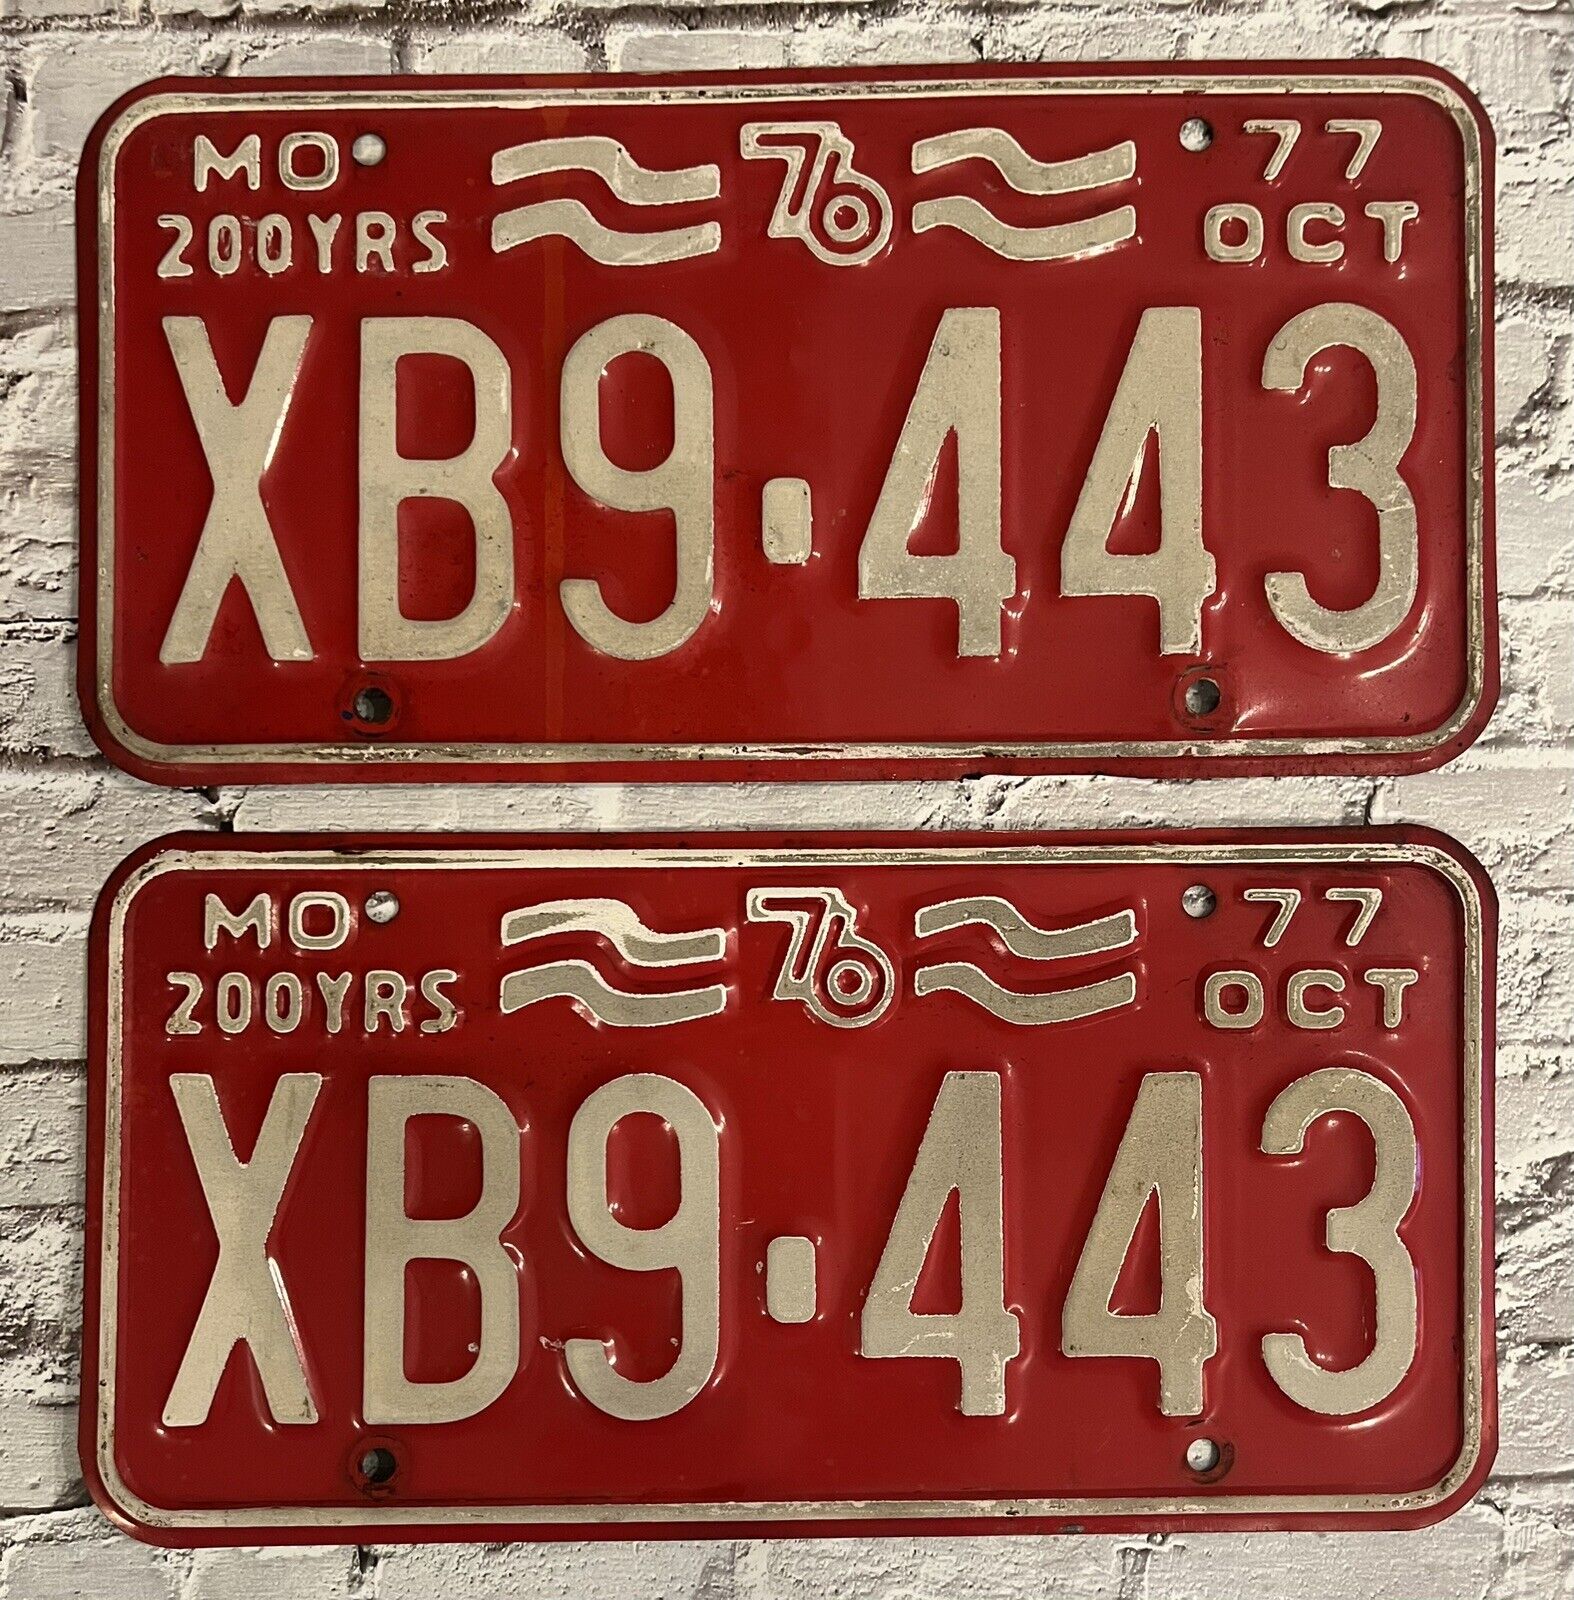 1976 Missouri Bicentennial 200 Years License Plate Matched Pair / Set XB9-443